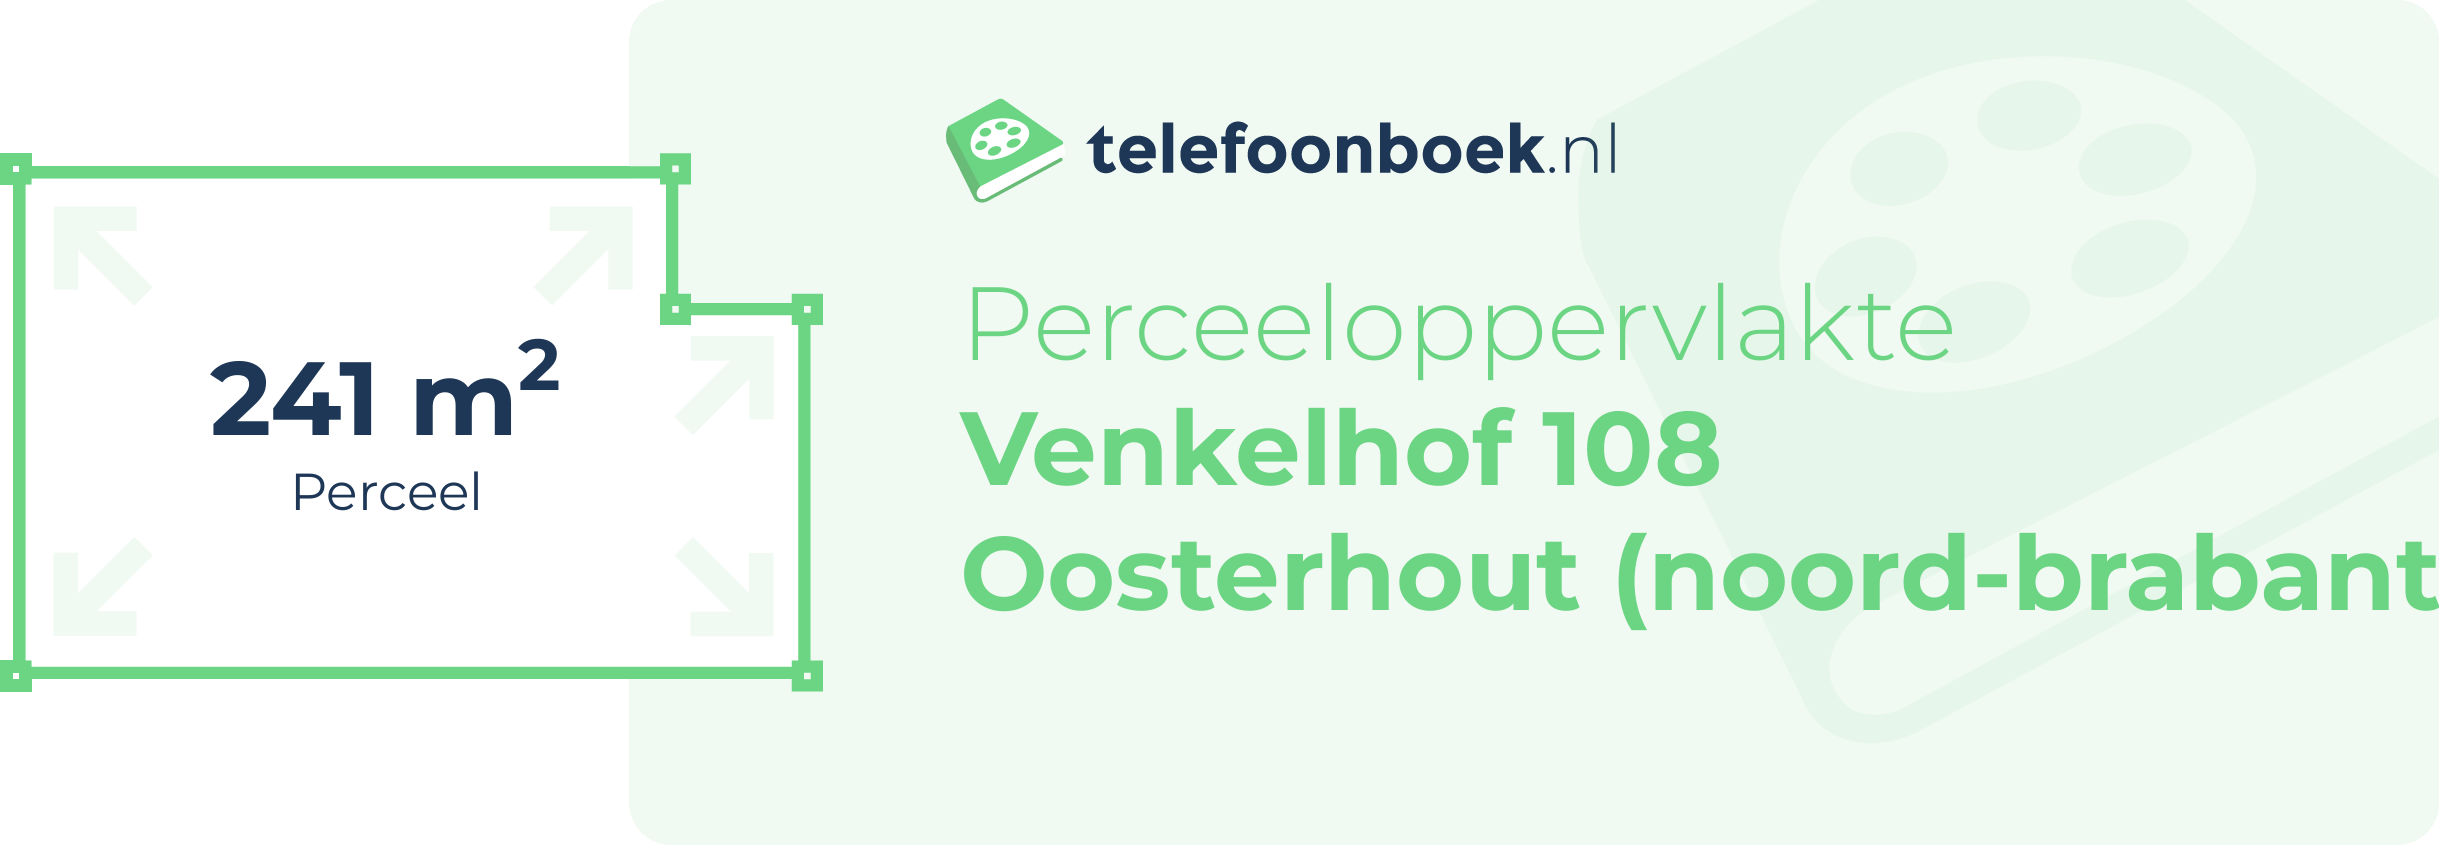 Perceeloppervlakte Venkelhof 108 Oosterhout (Noord-Brabant)